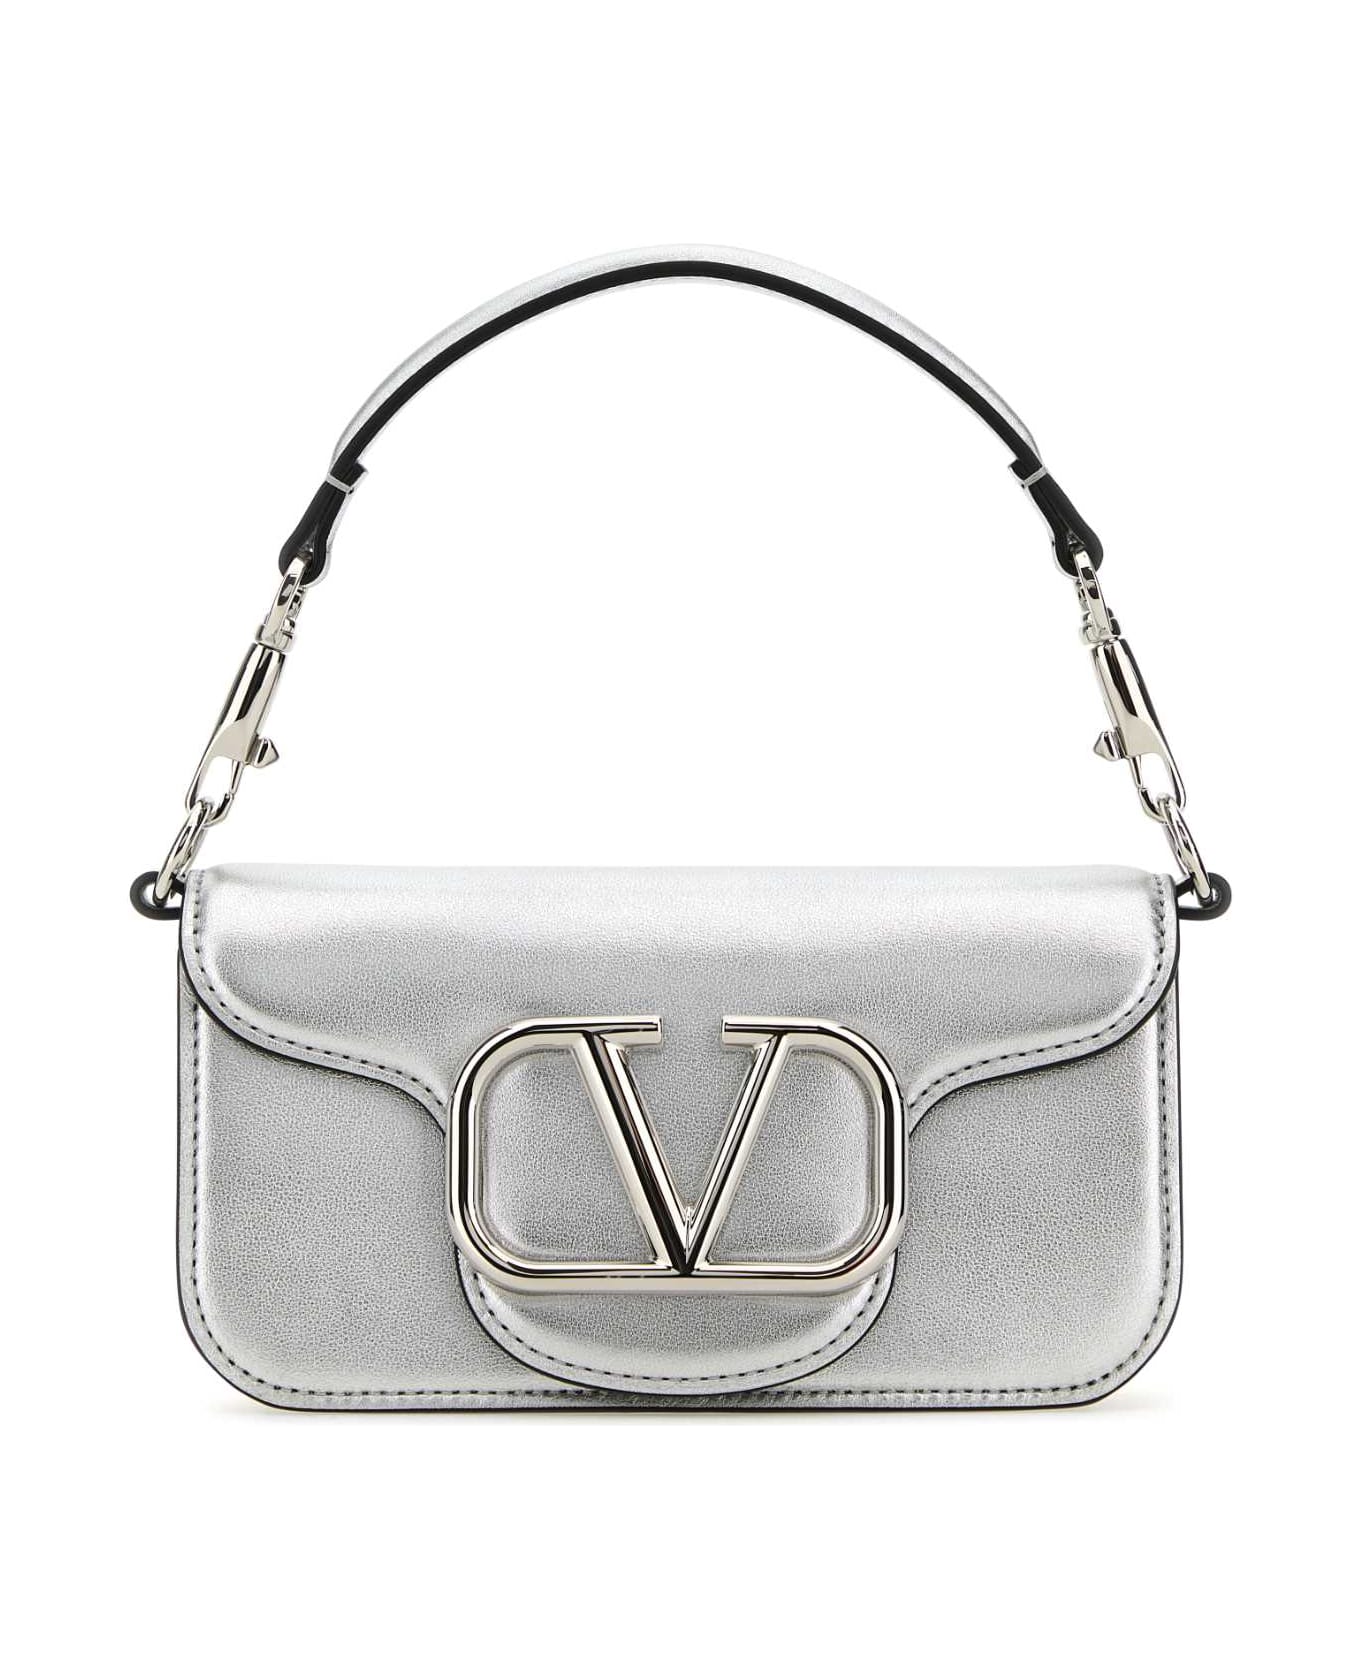 Valentino Garavani Silver Leather Locã² Handbag - SILVER